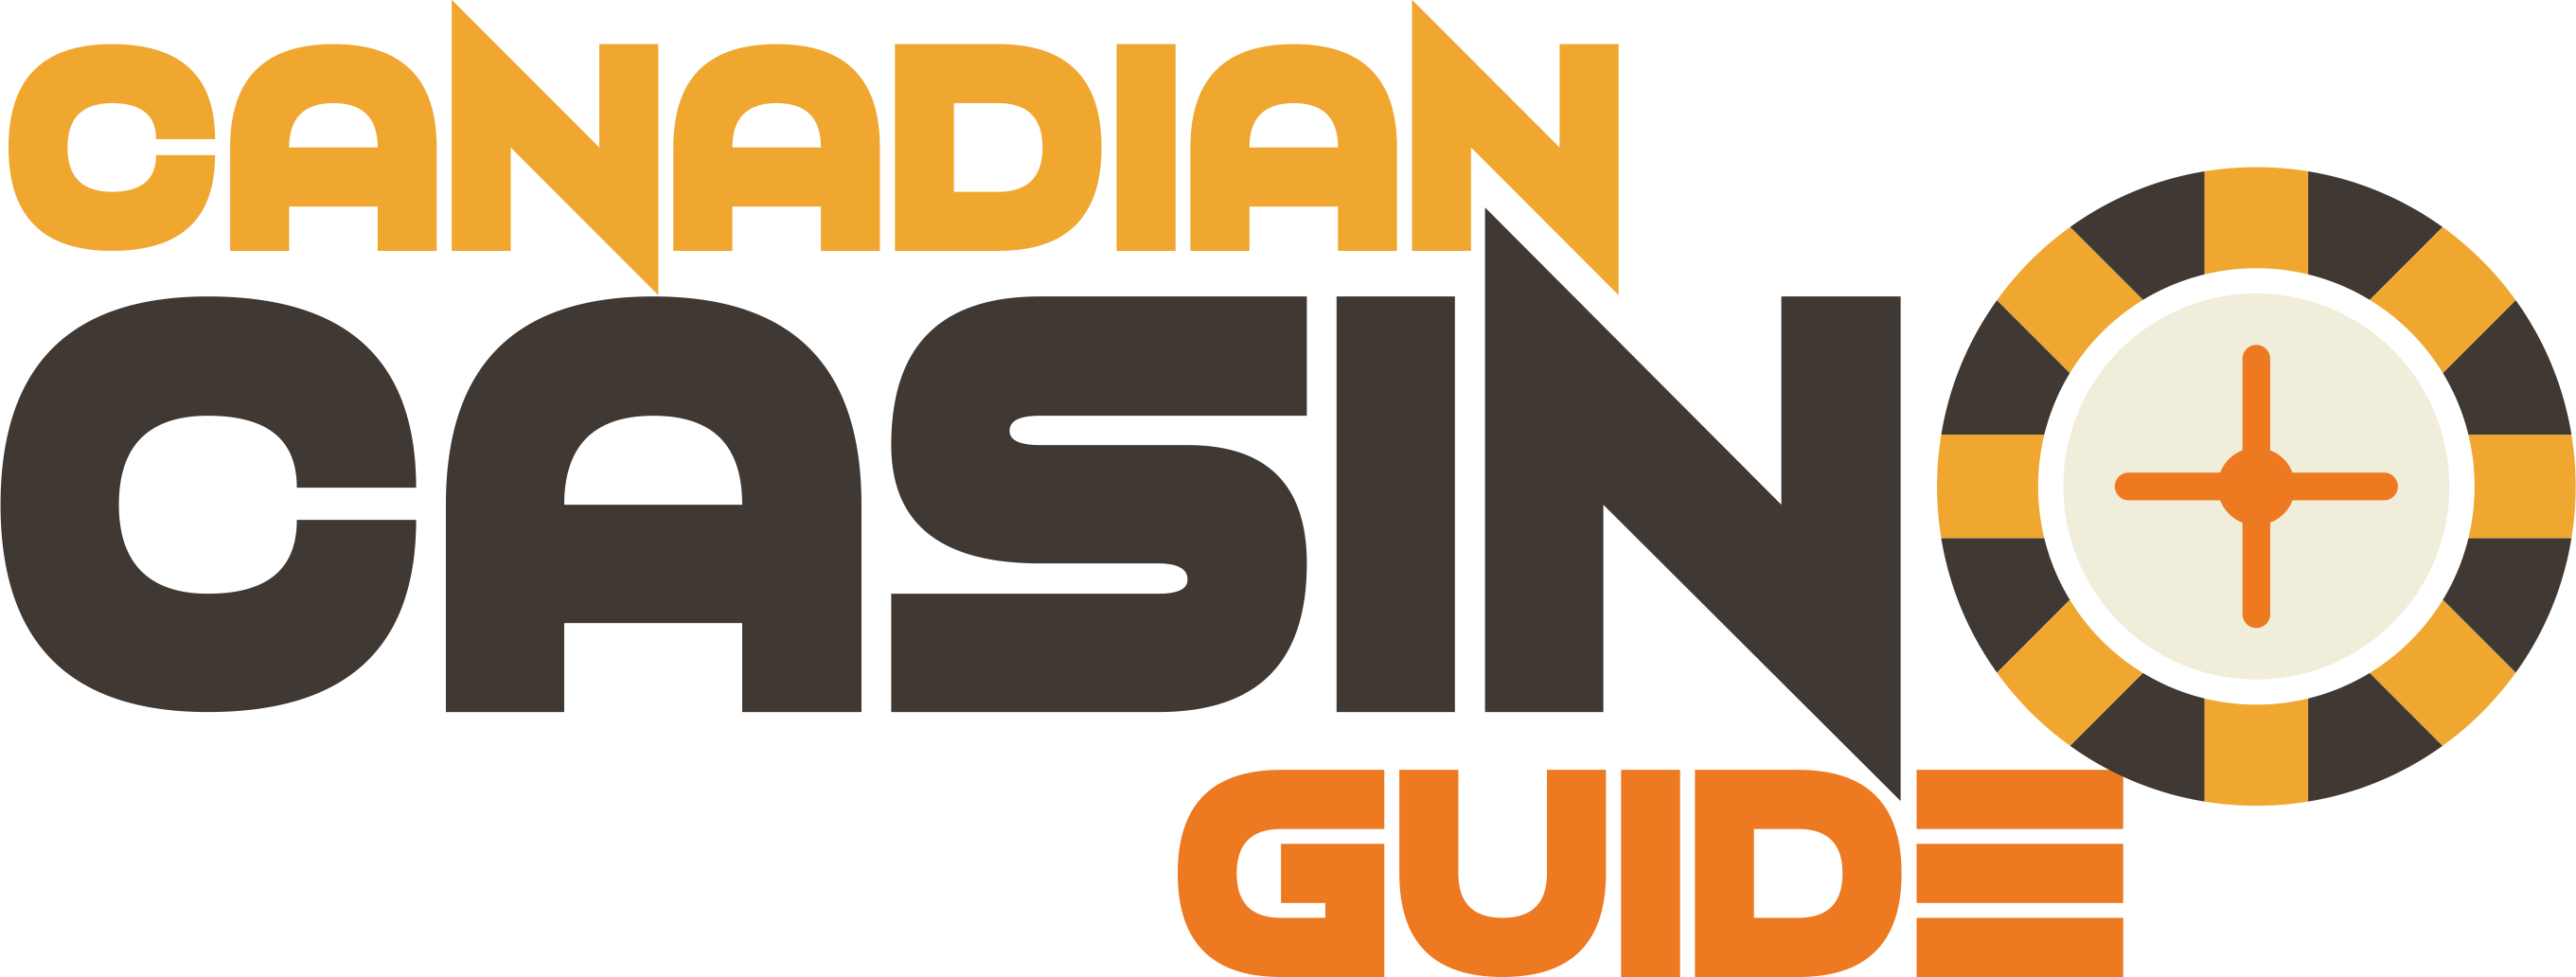 Canadian casino guide